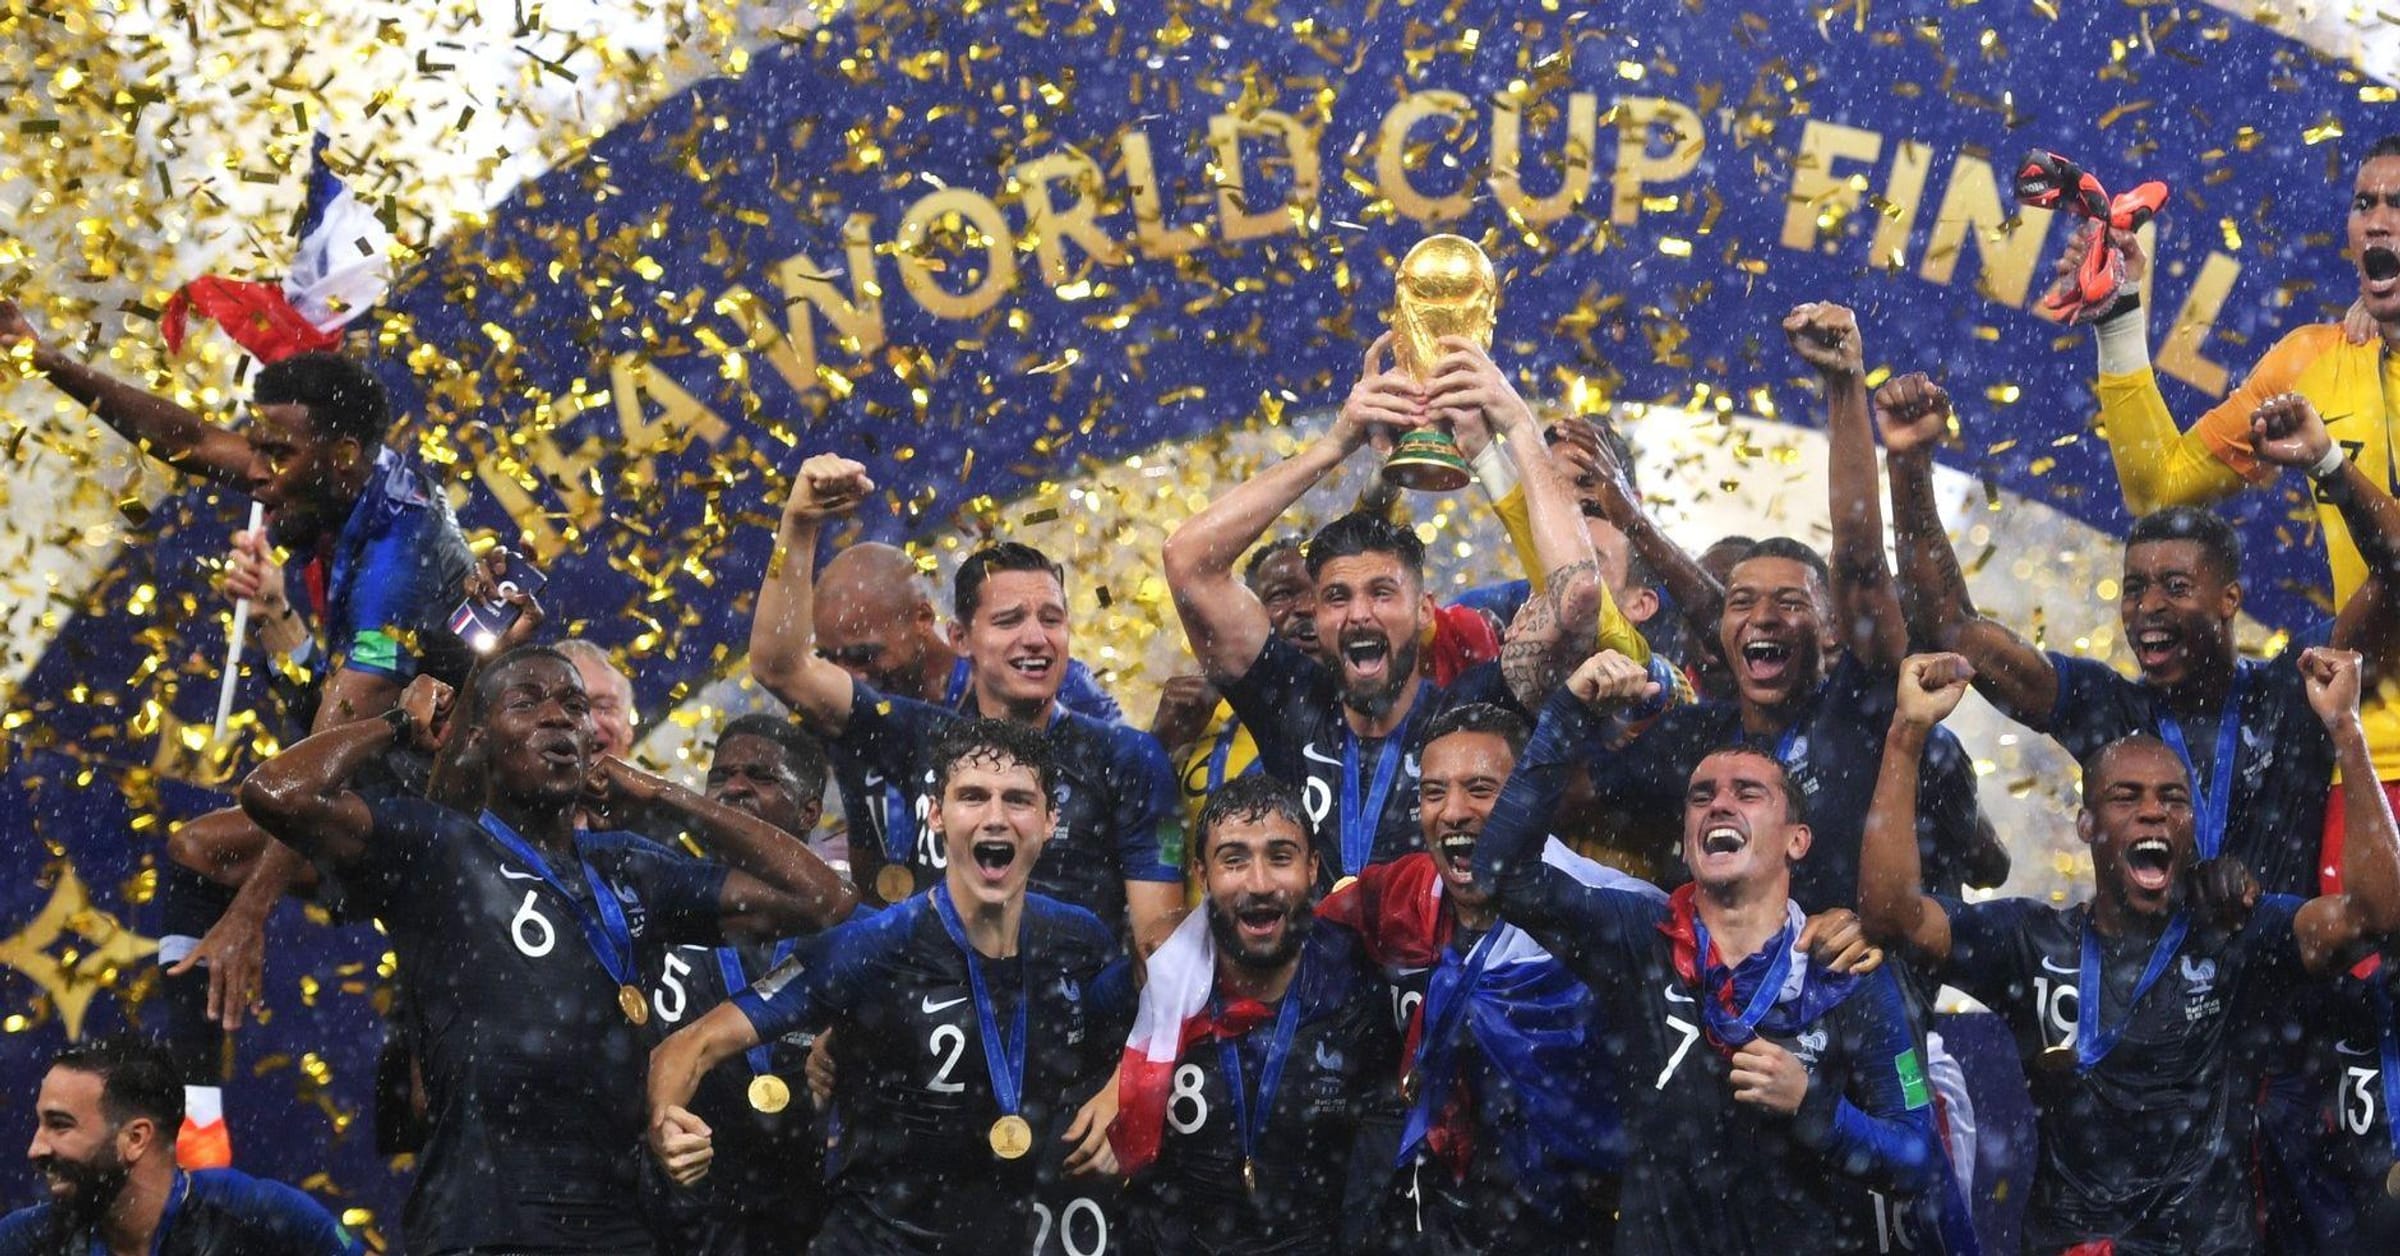 Coupe du monde de football 2010 — Wikipédia